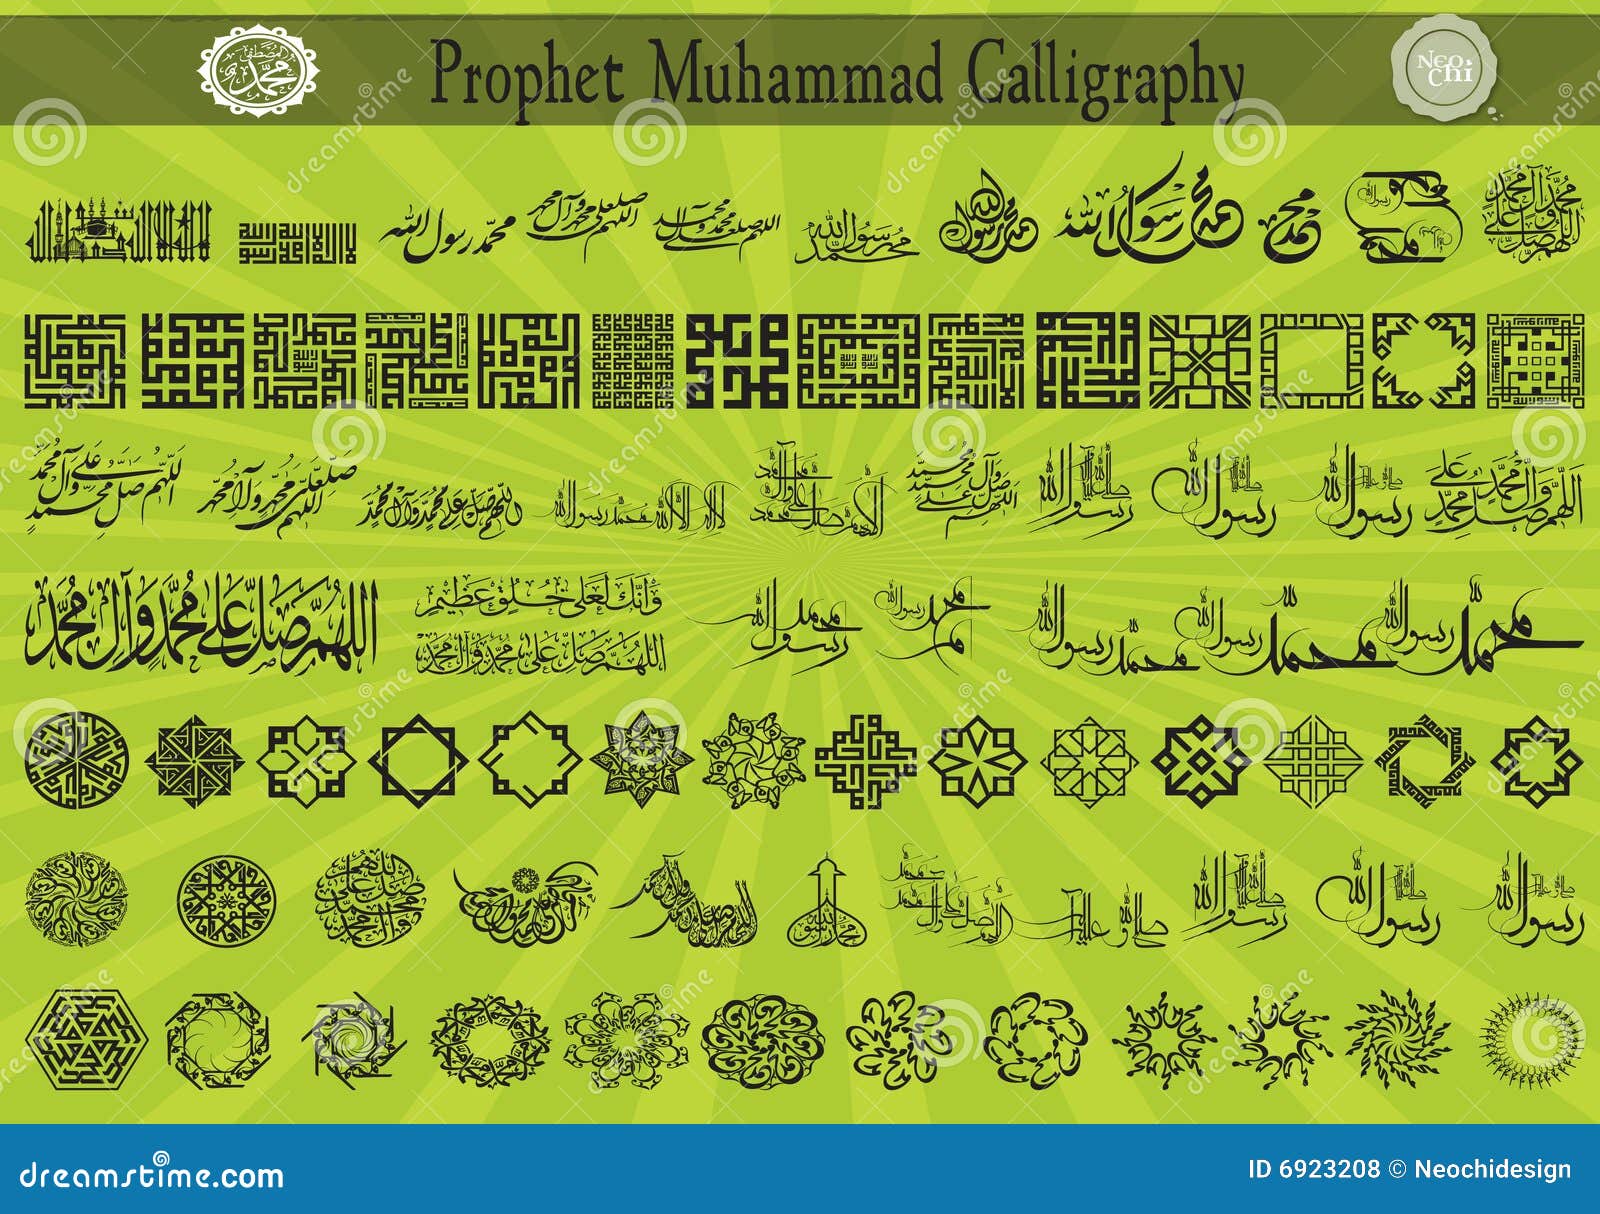 prophet muhammad calligraphy